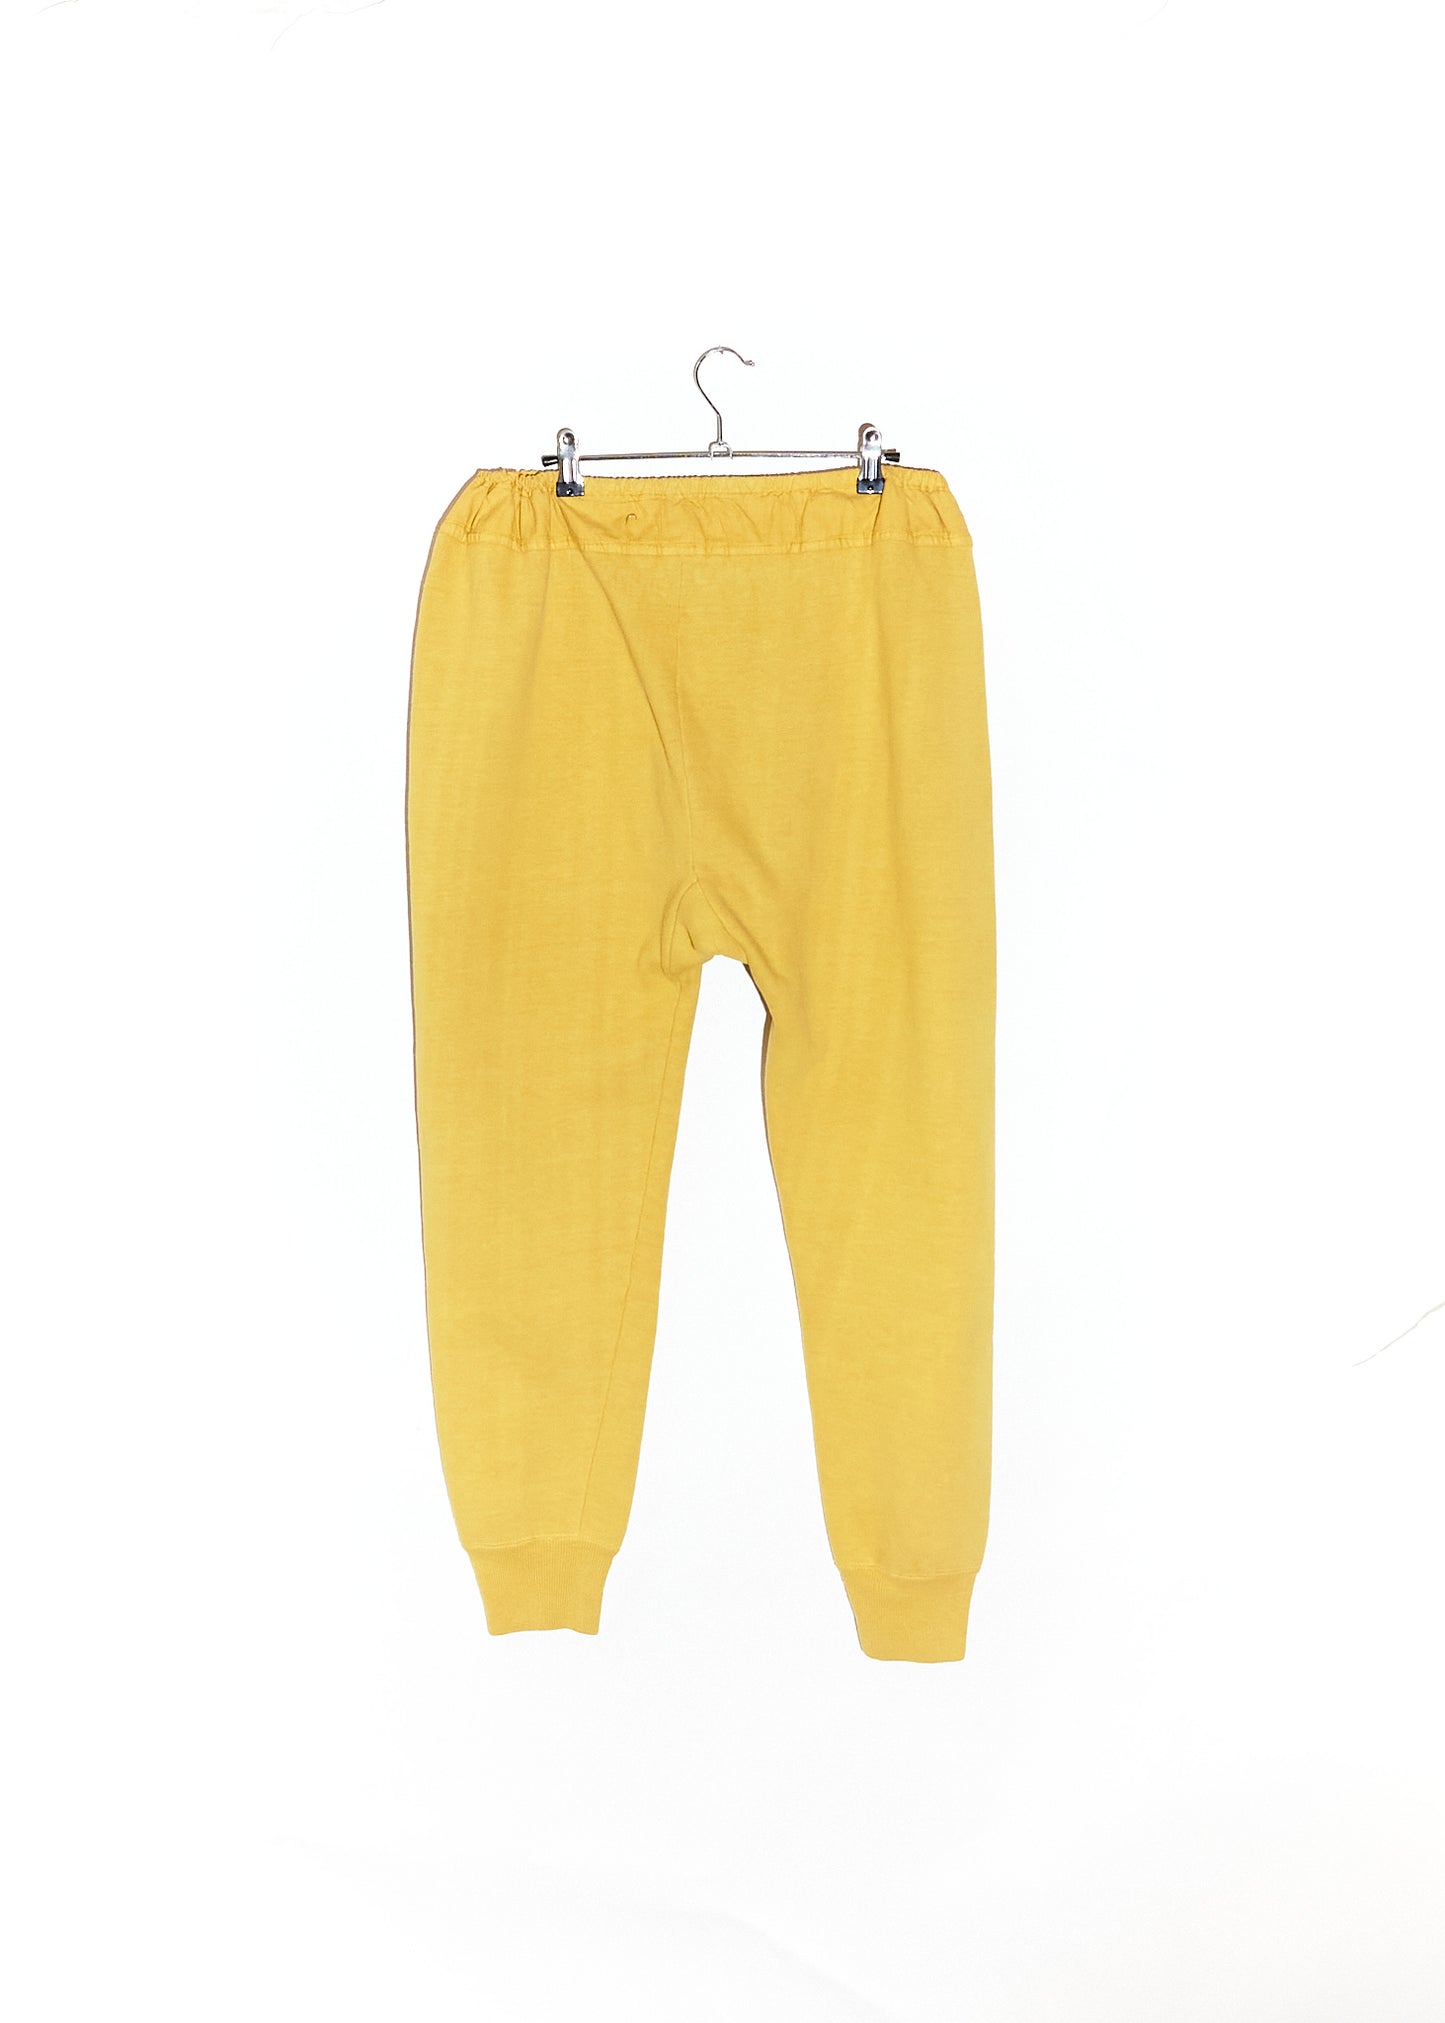 Yellow Sweatpants